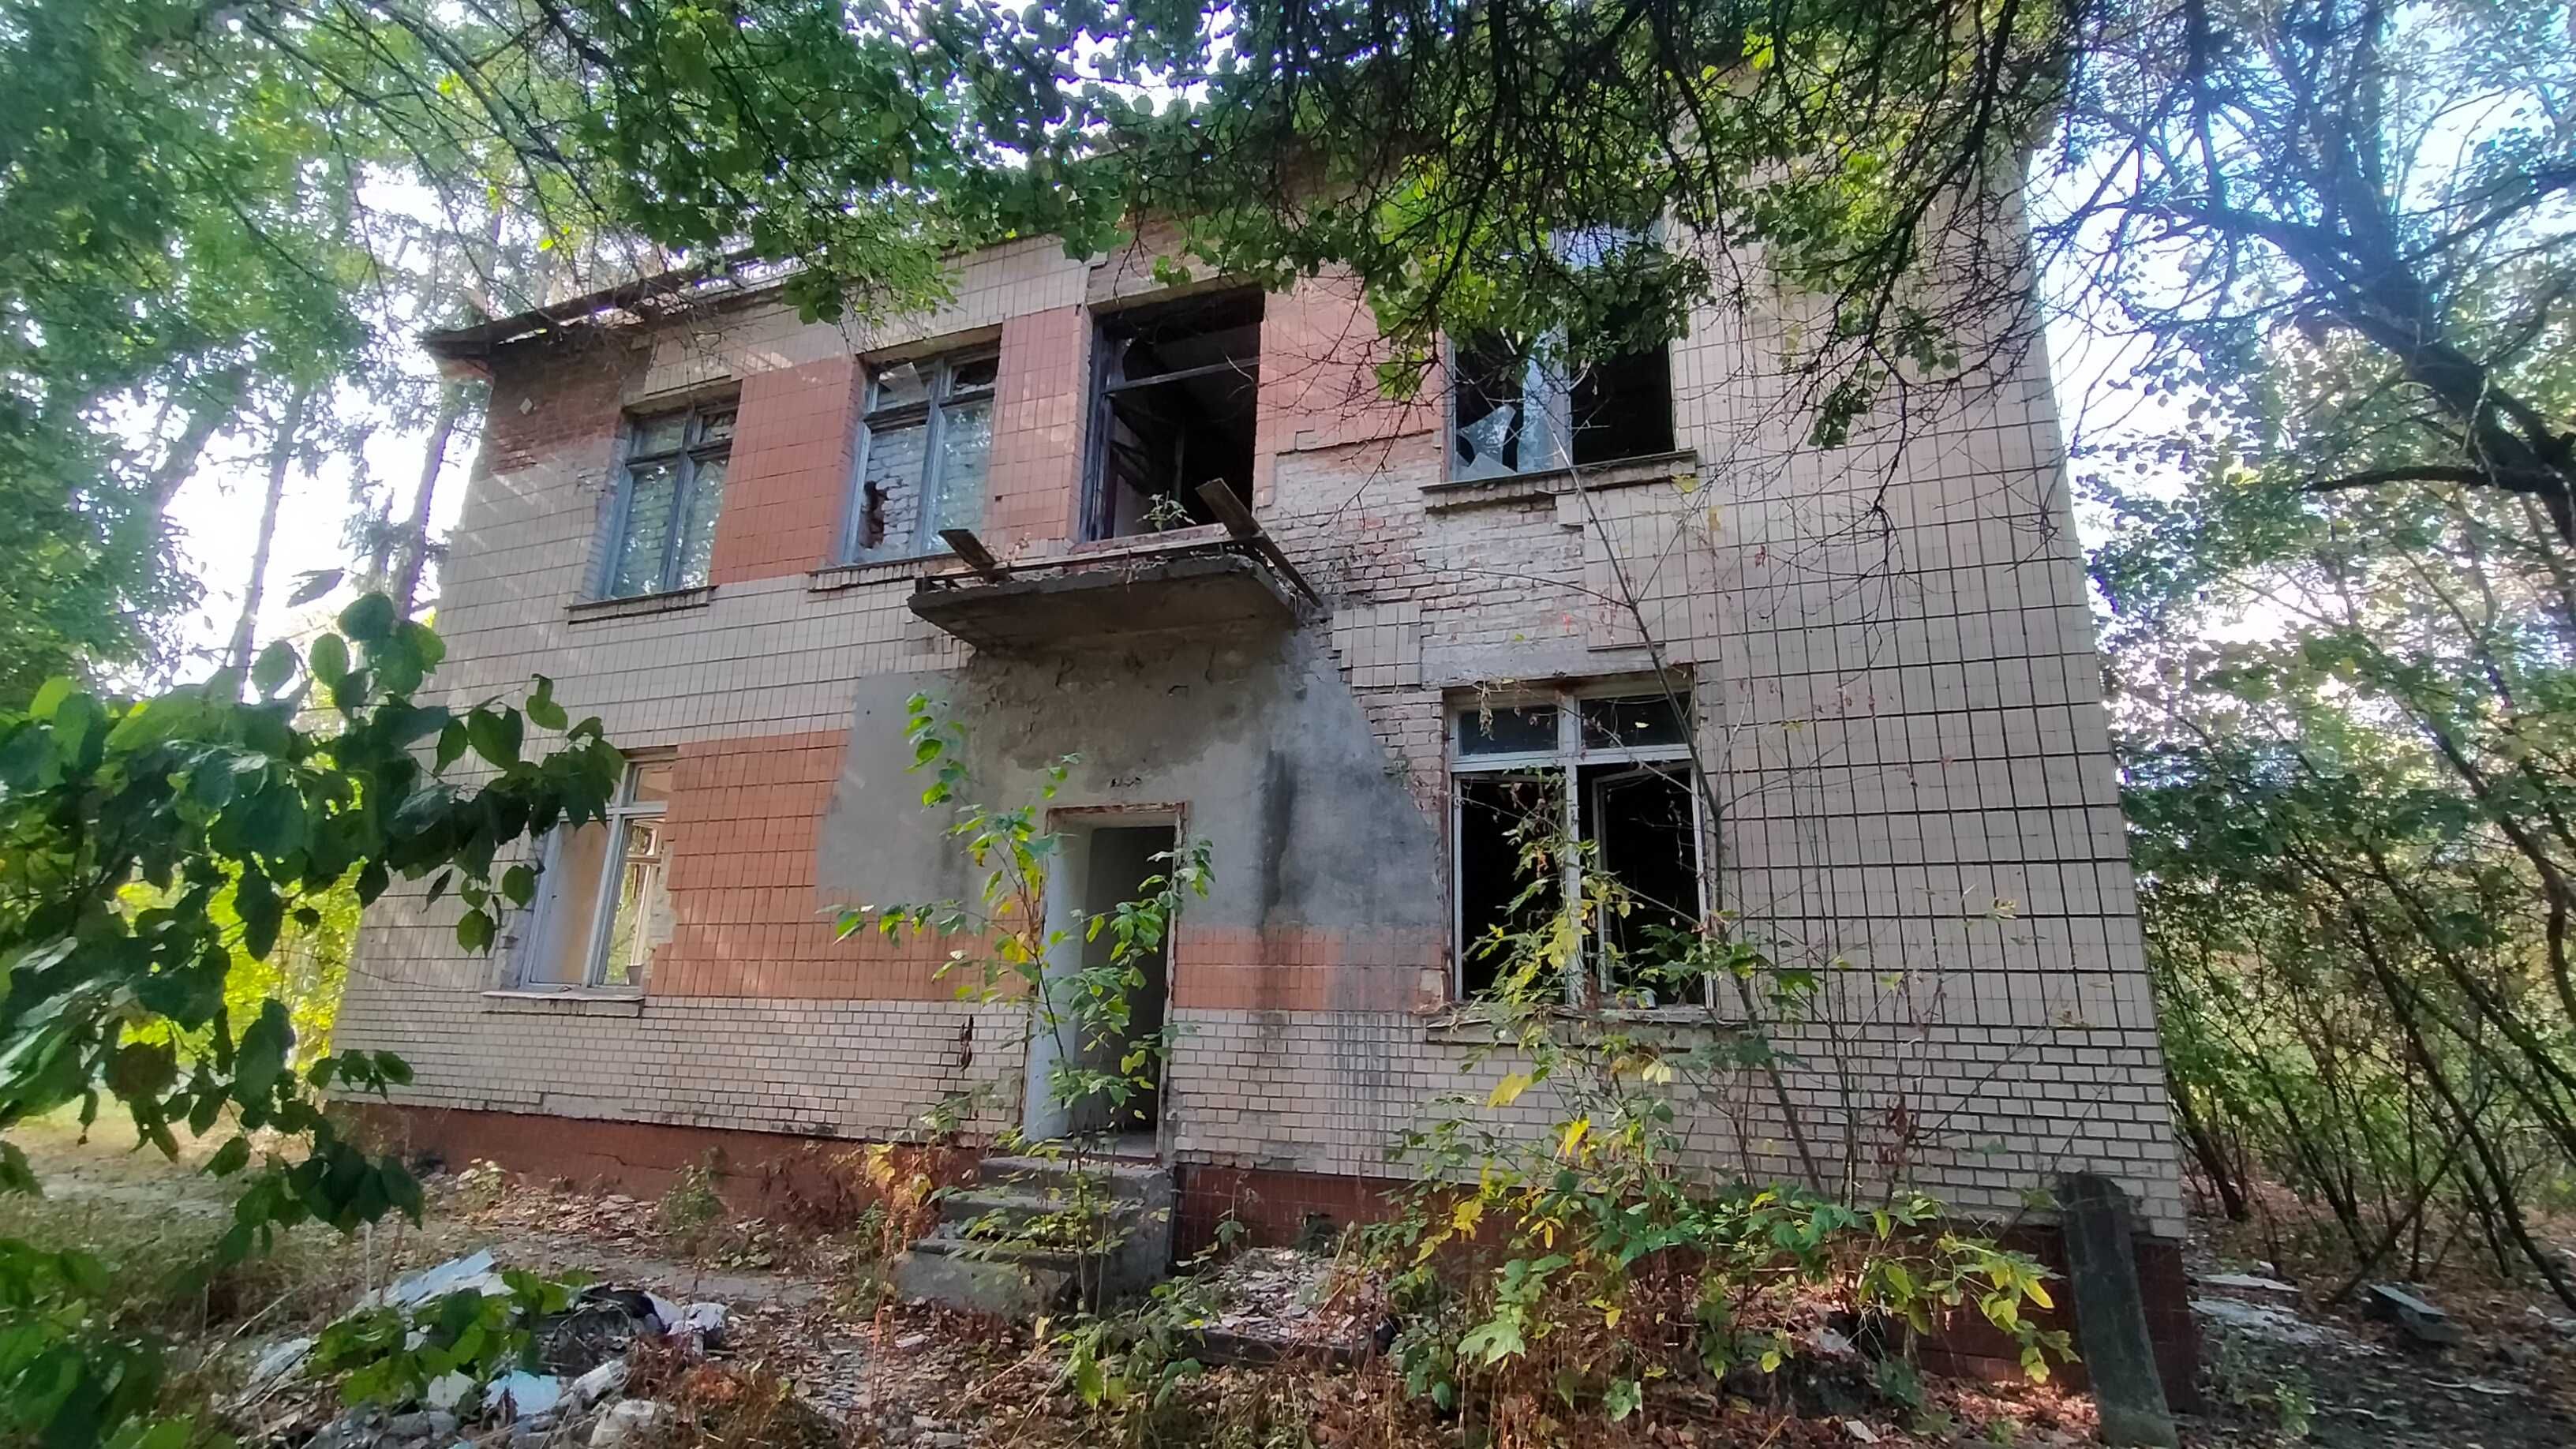 Продажа здания Фасад трасса Киев - Суммы, без %